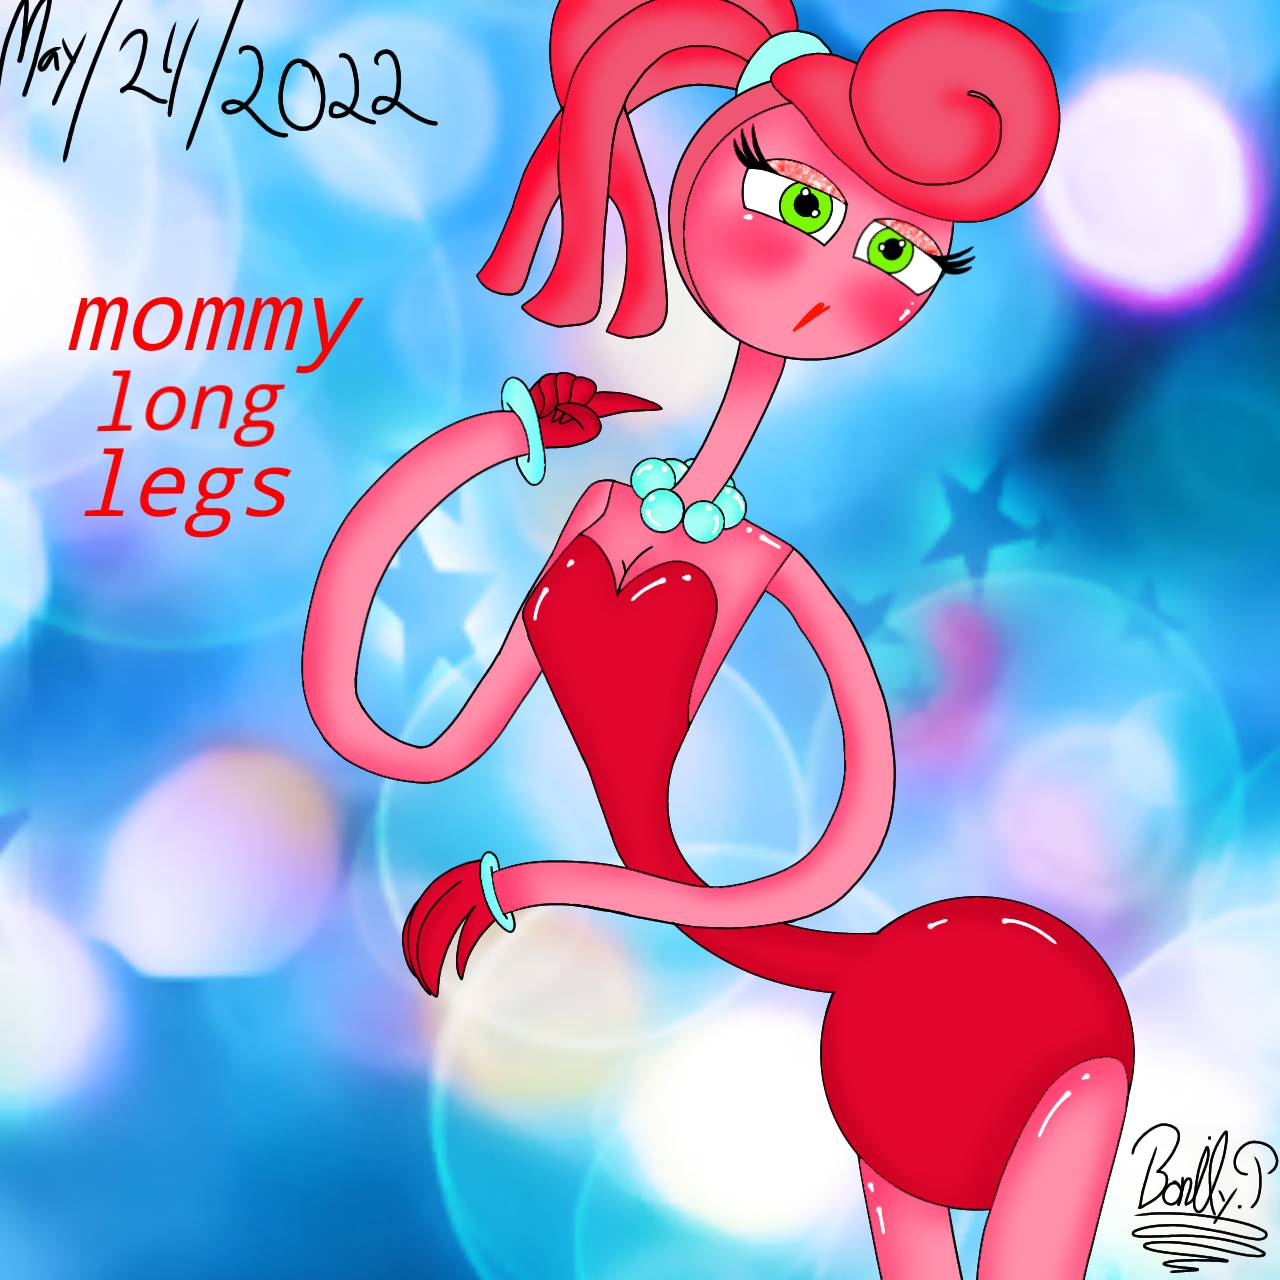 Mommy long legs by DoughyDemon on DeviantArt